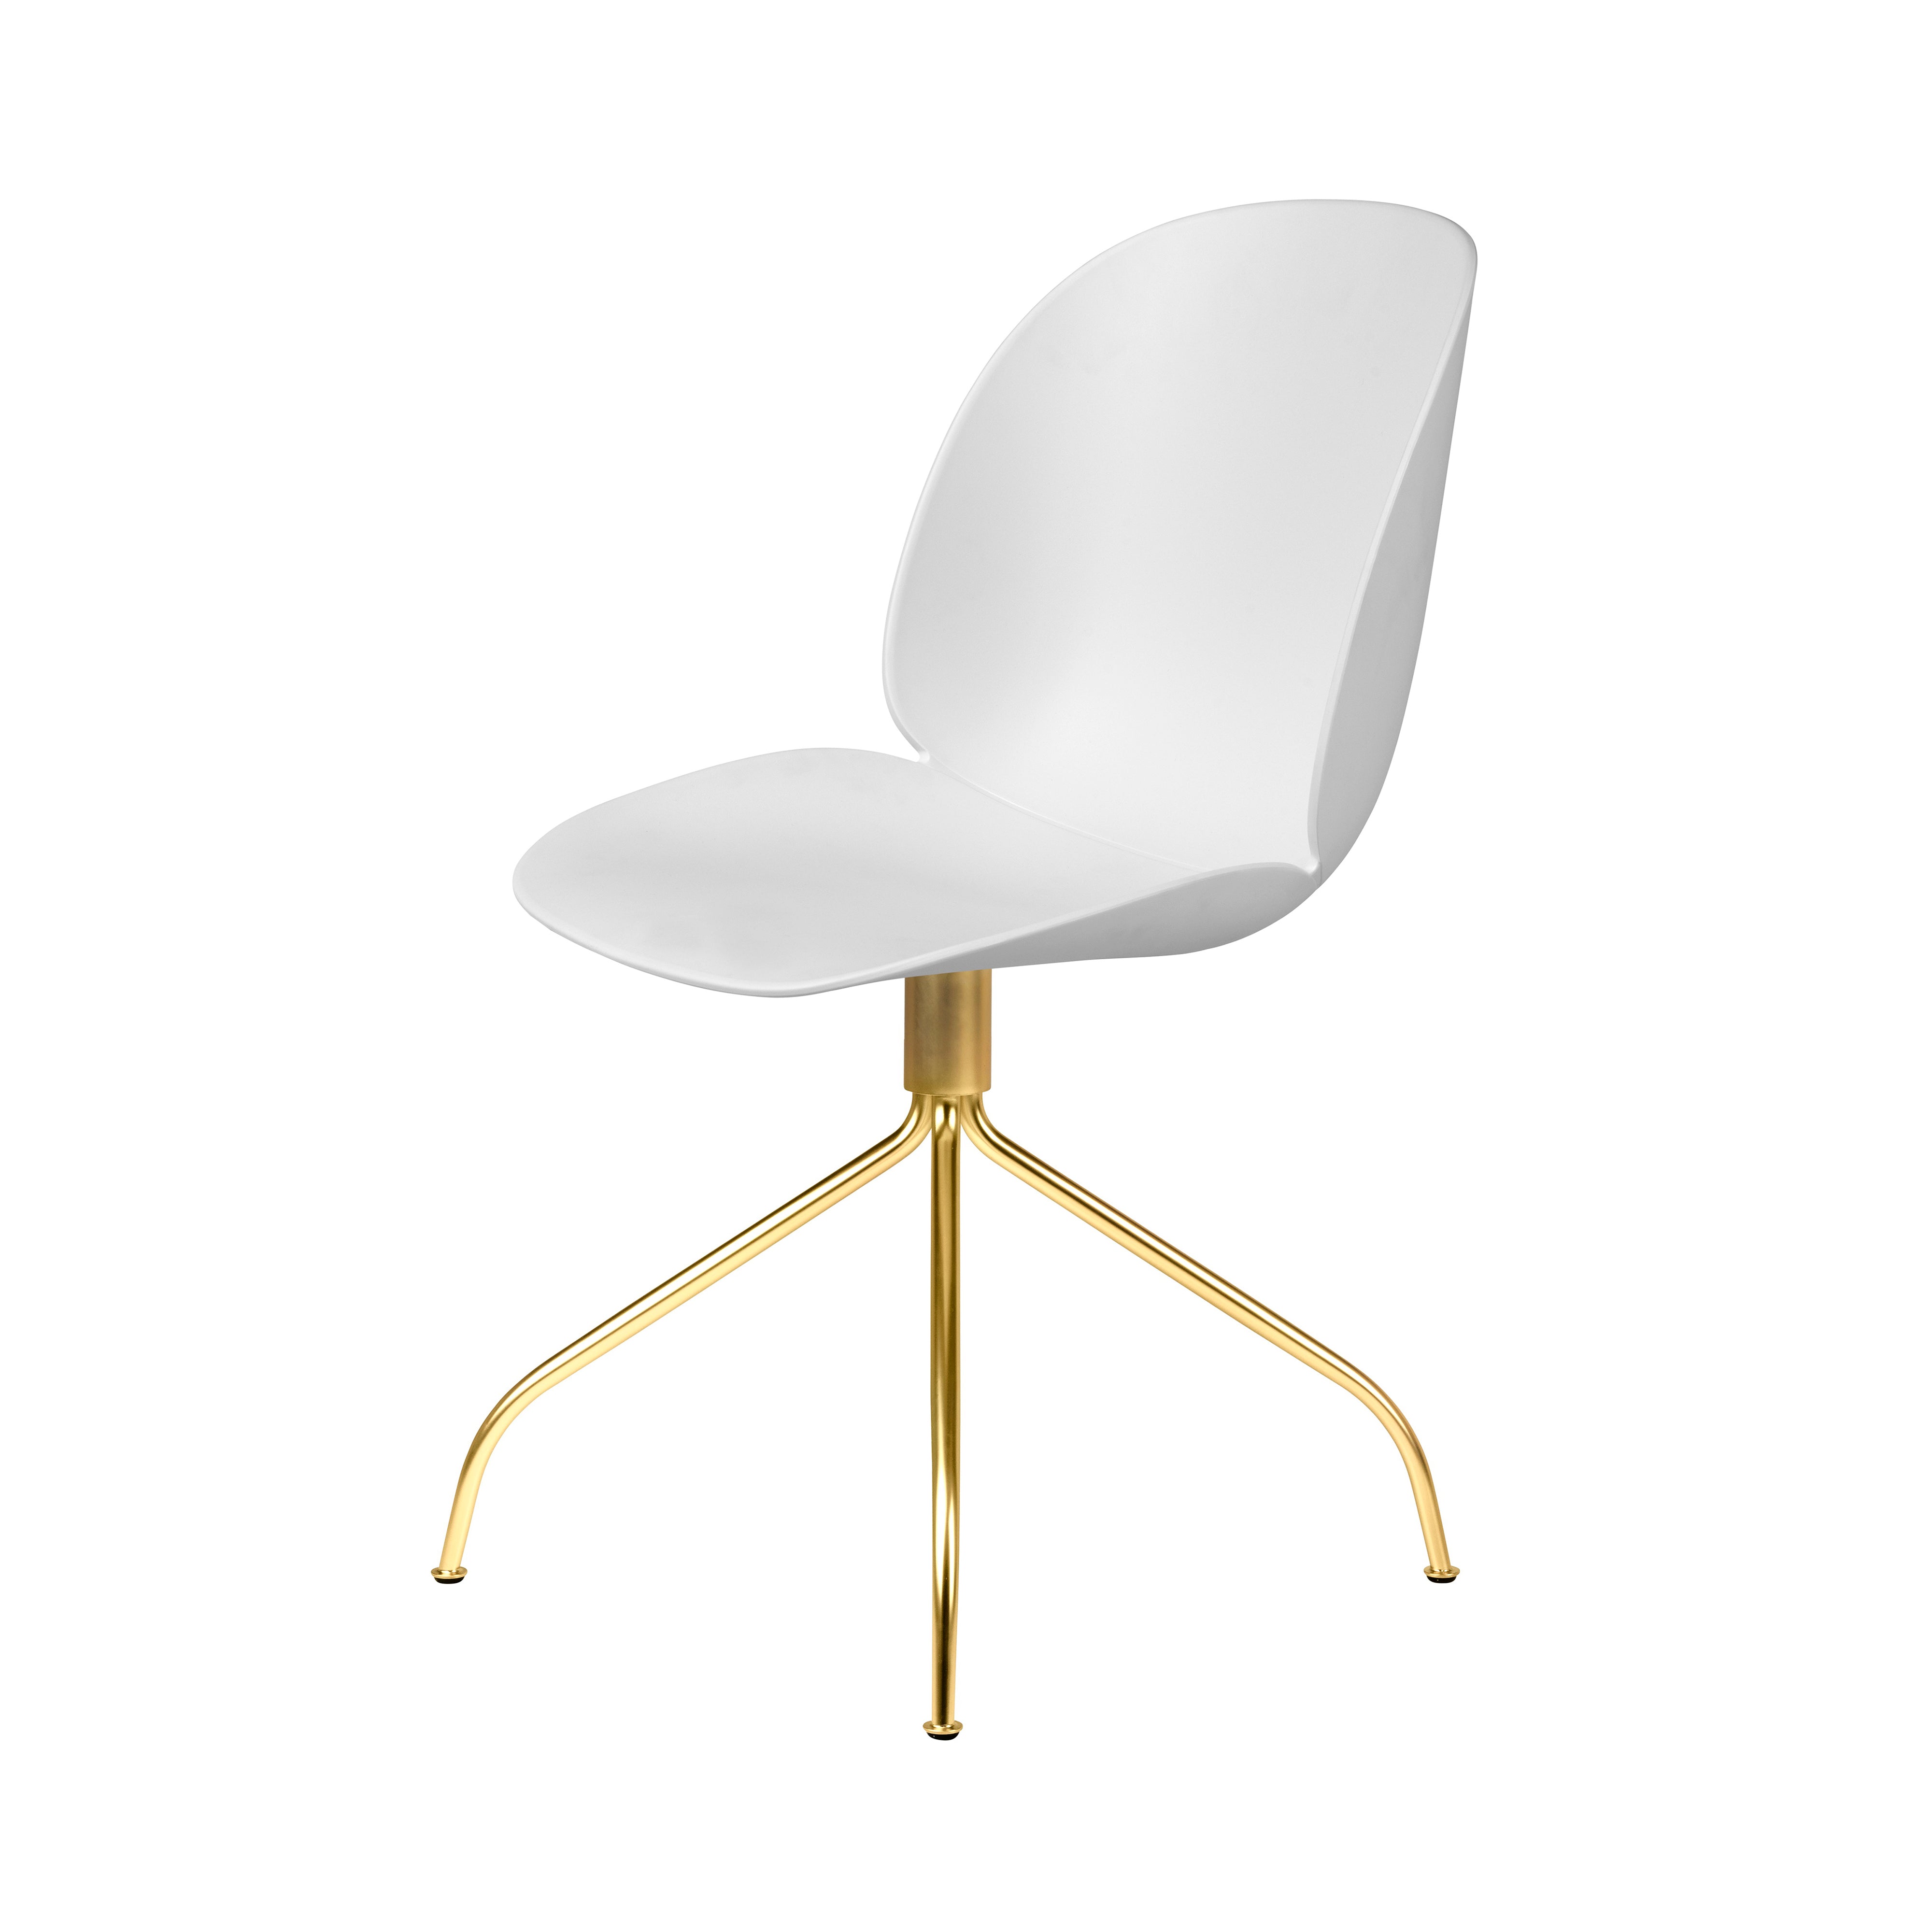 Beetle Meeting Chair: Swivel Base + Alabaster White + Brass Semi Matt + Felt Glides